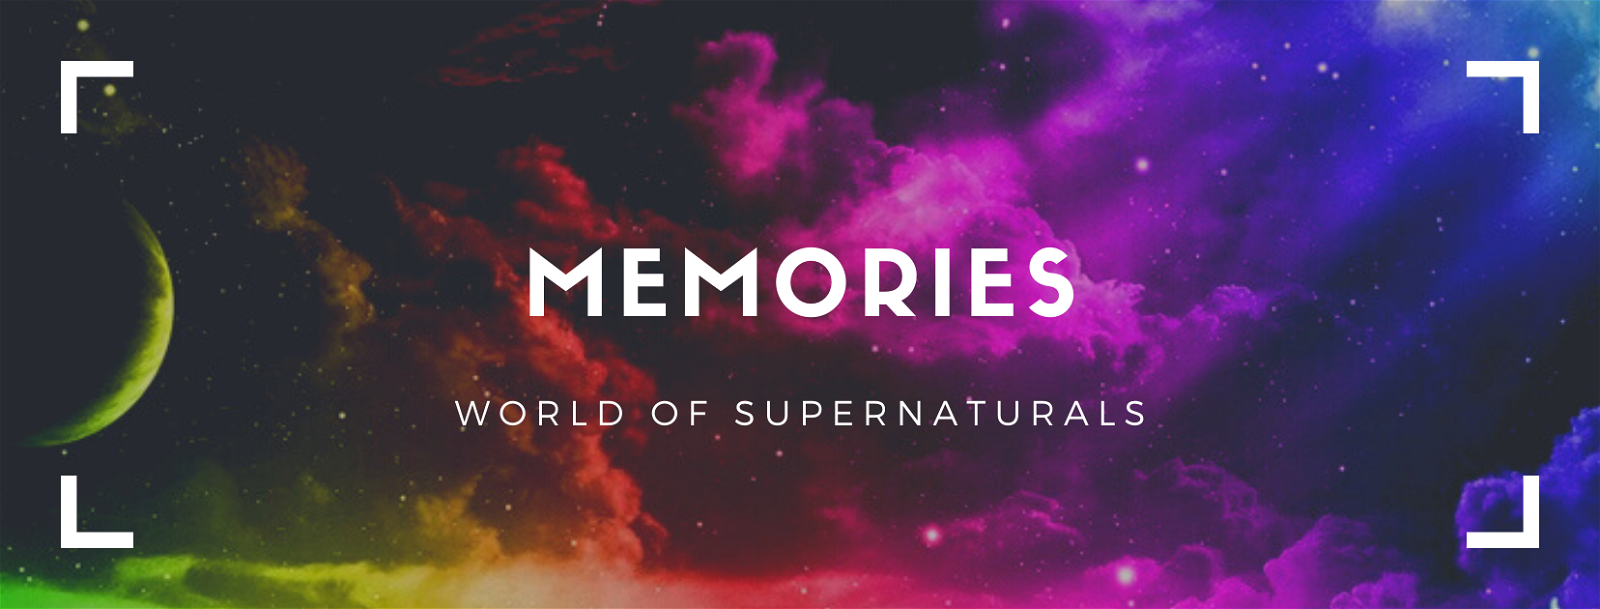 World of Supernaturals: Memories of Two Years